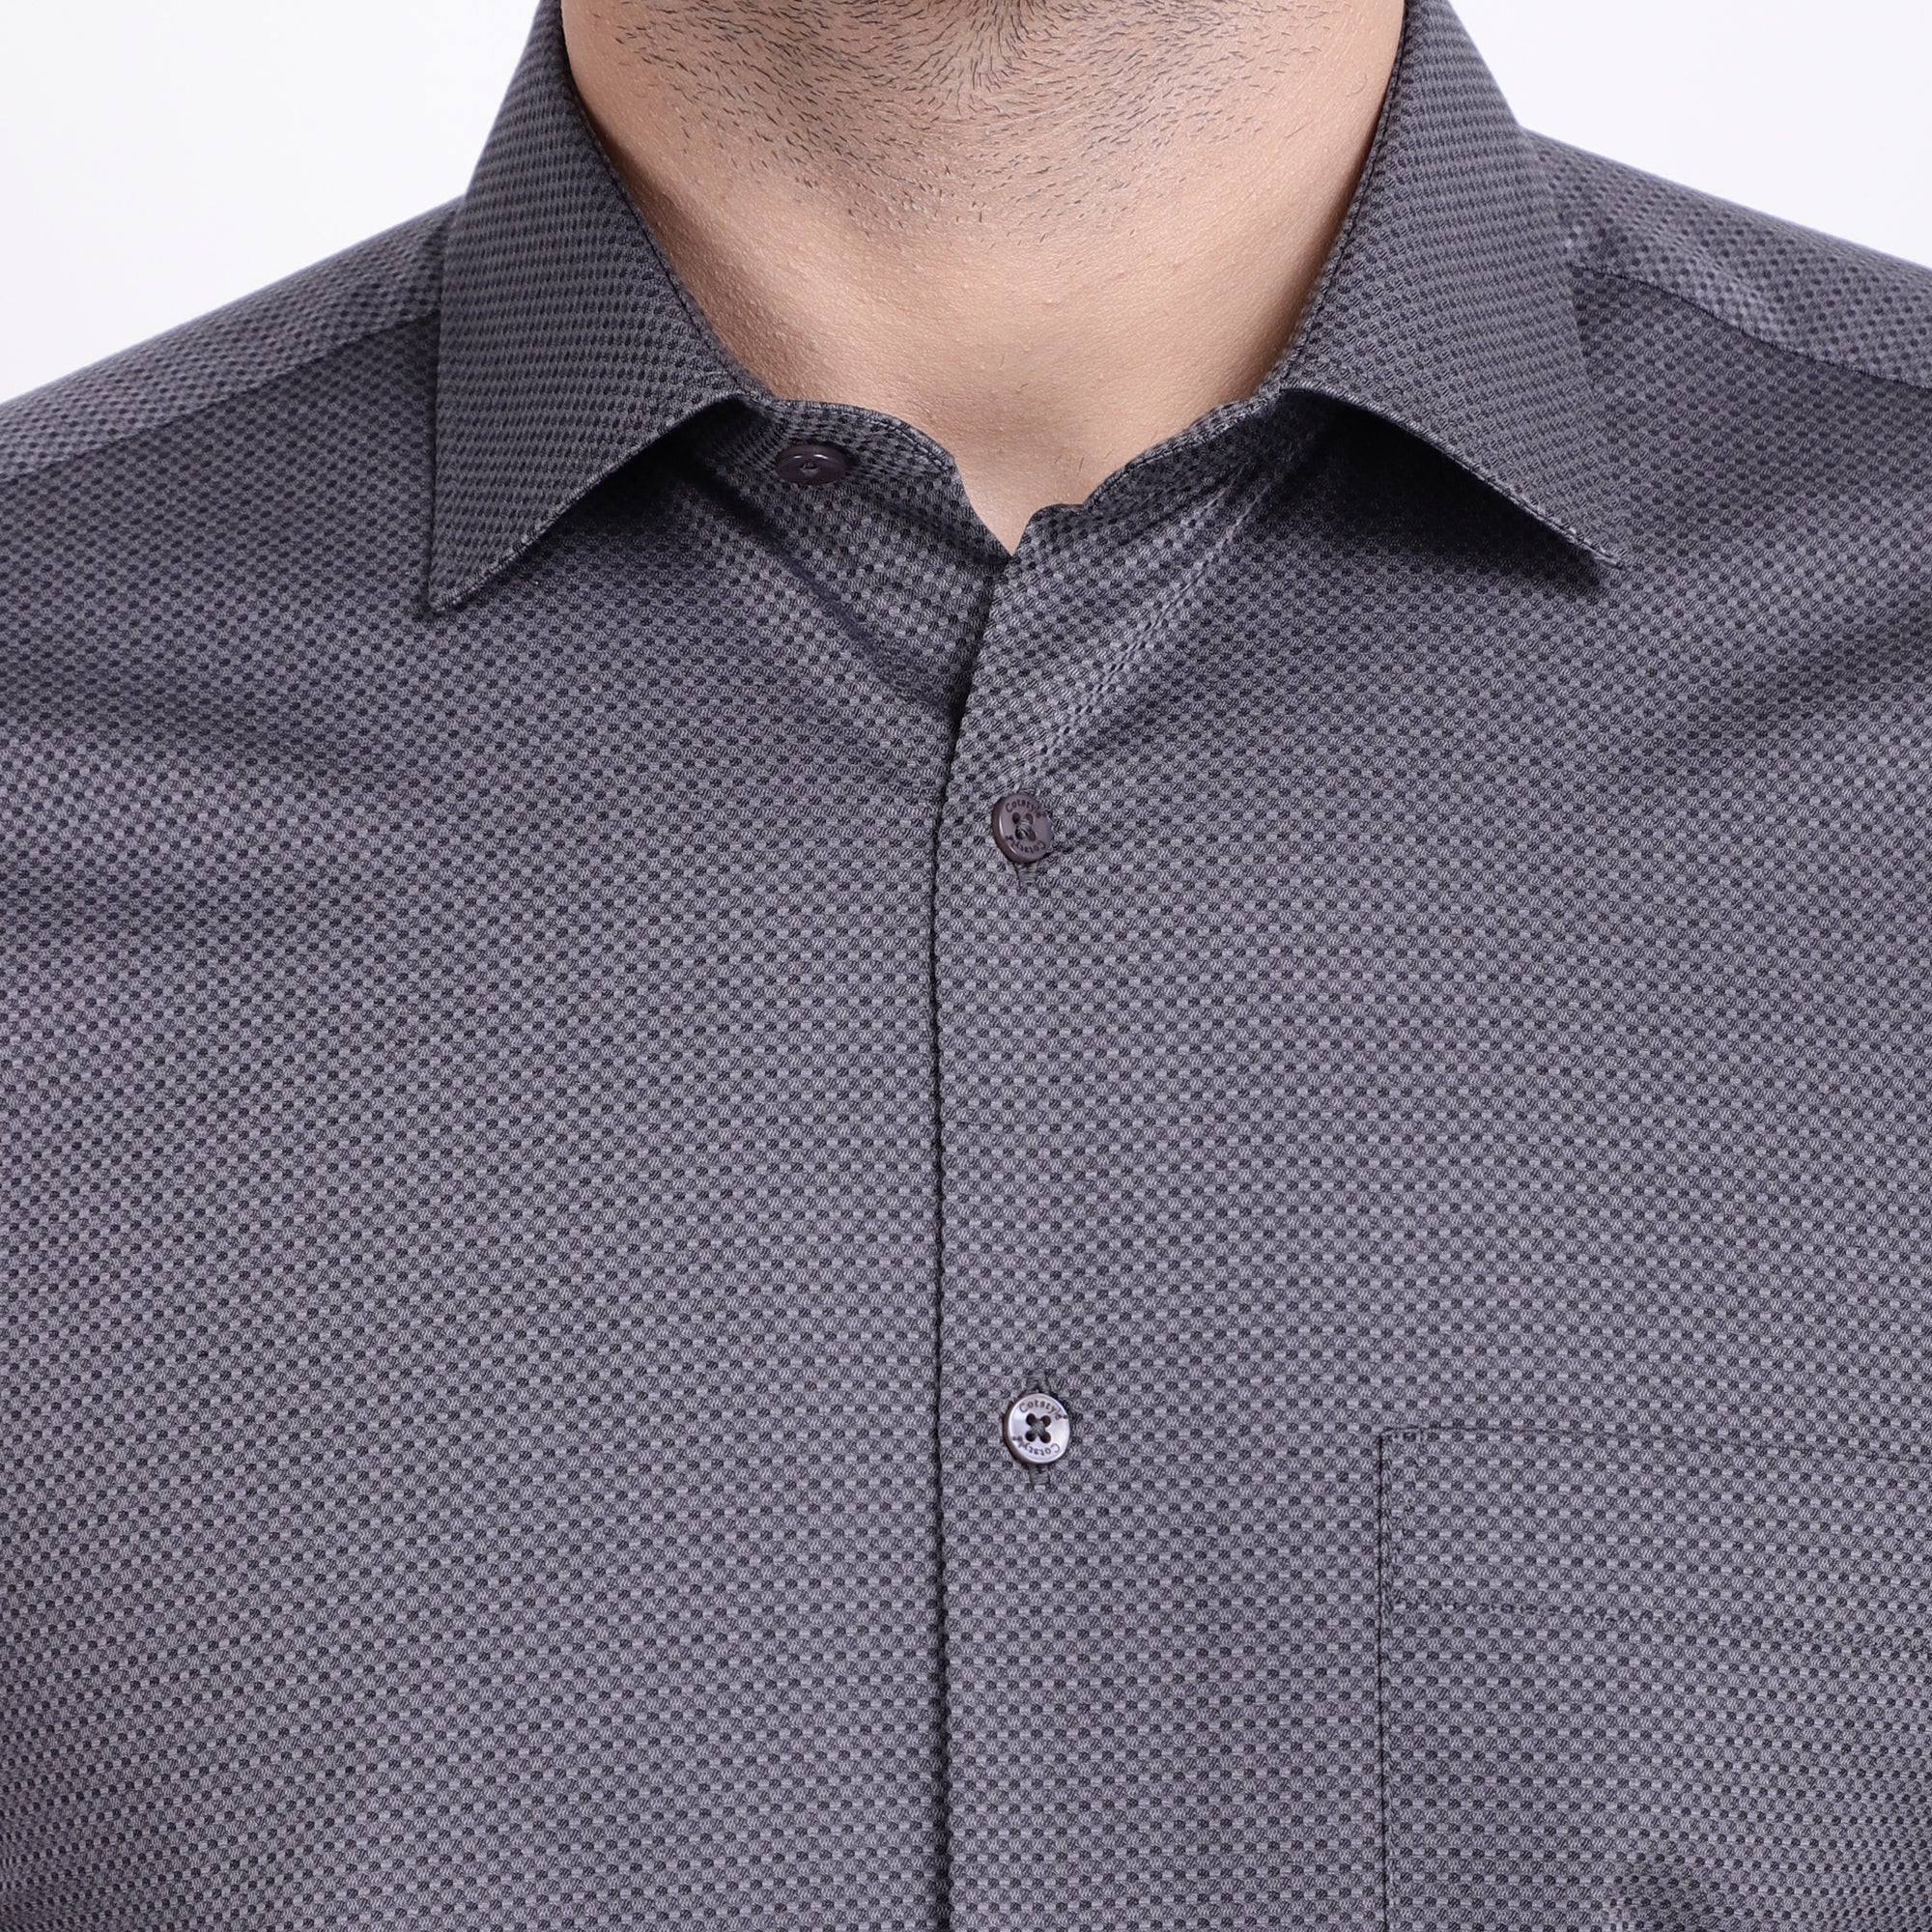 Men's Luthai Supima Mercerised Cotton Tiny Check Jacquard Design Regular Fit Dress Shirt